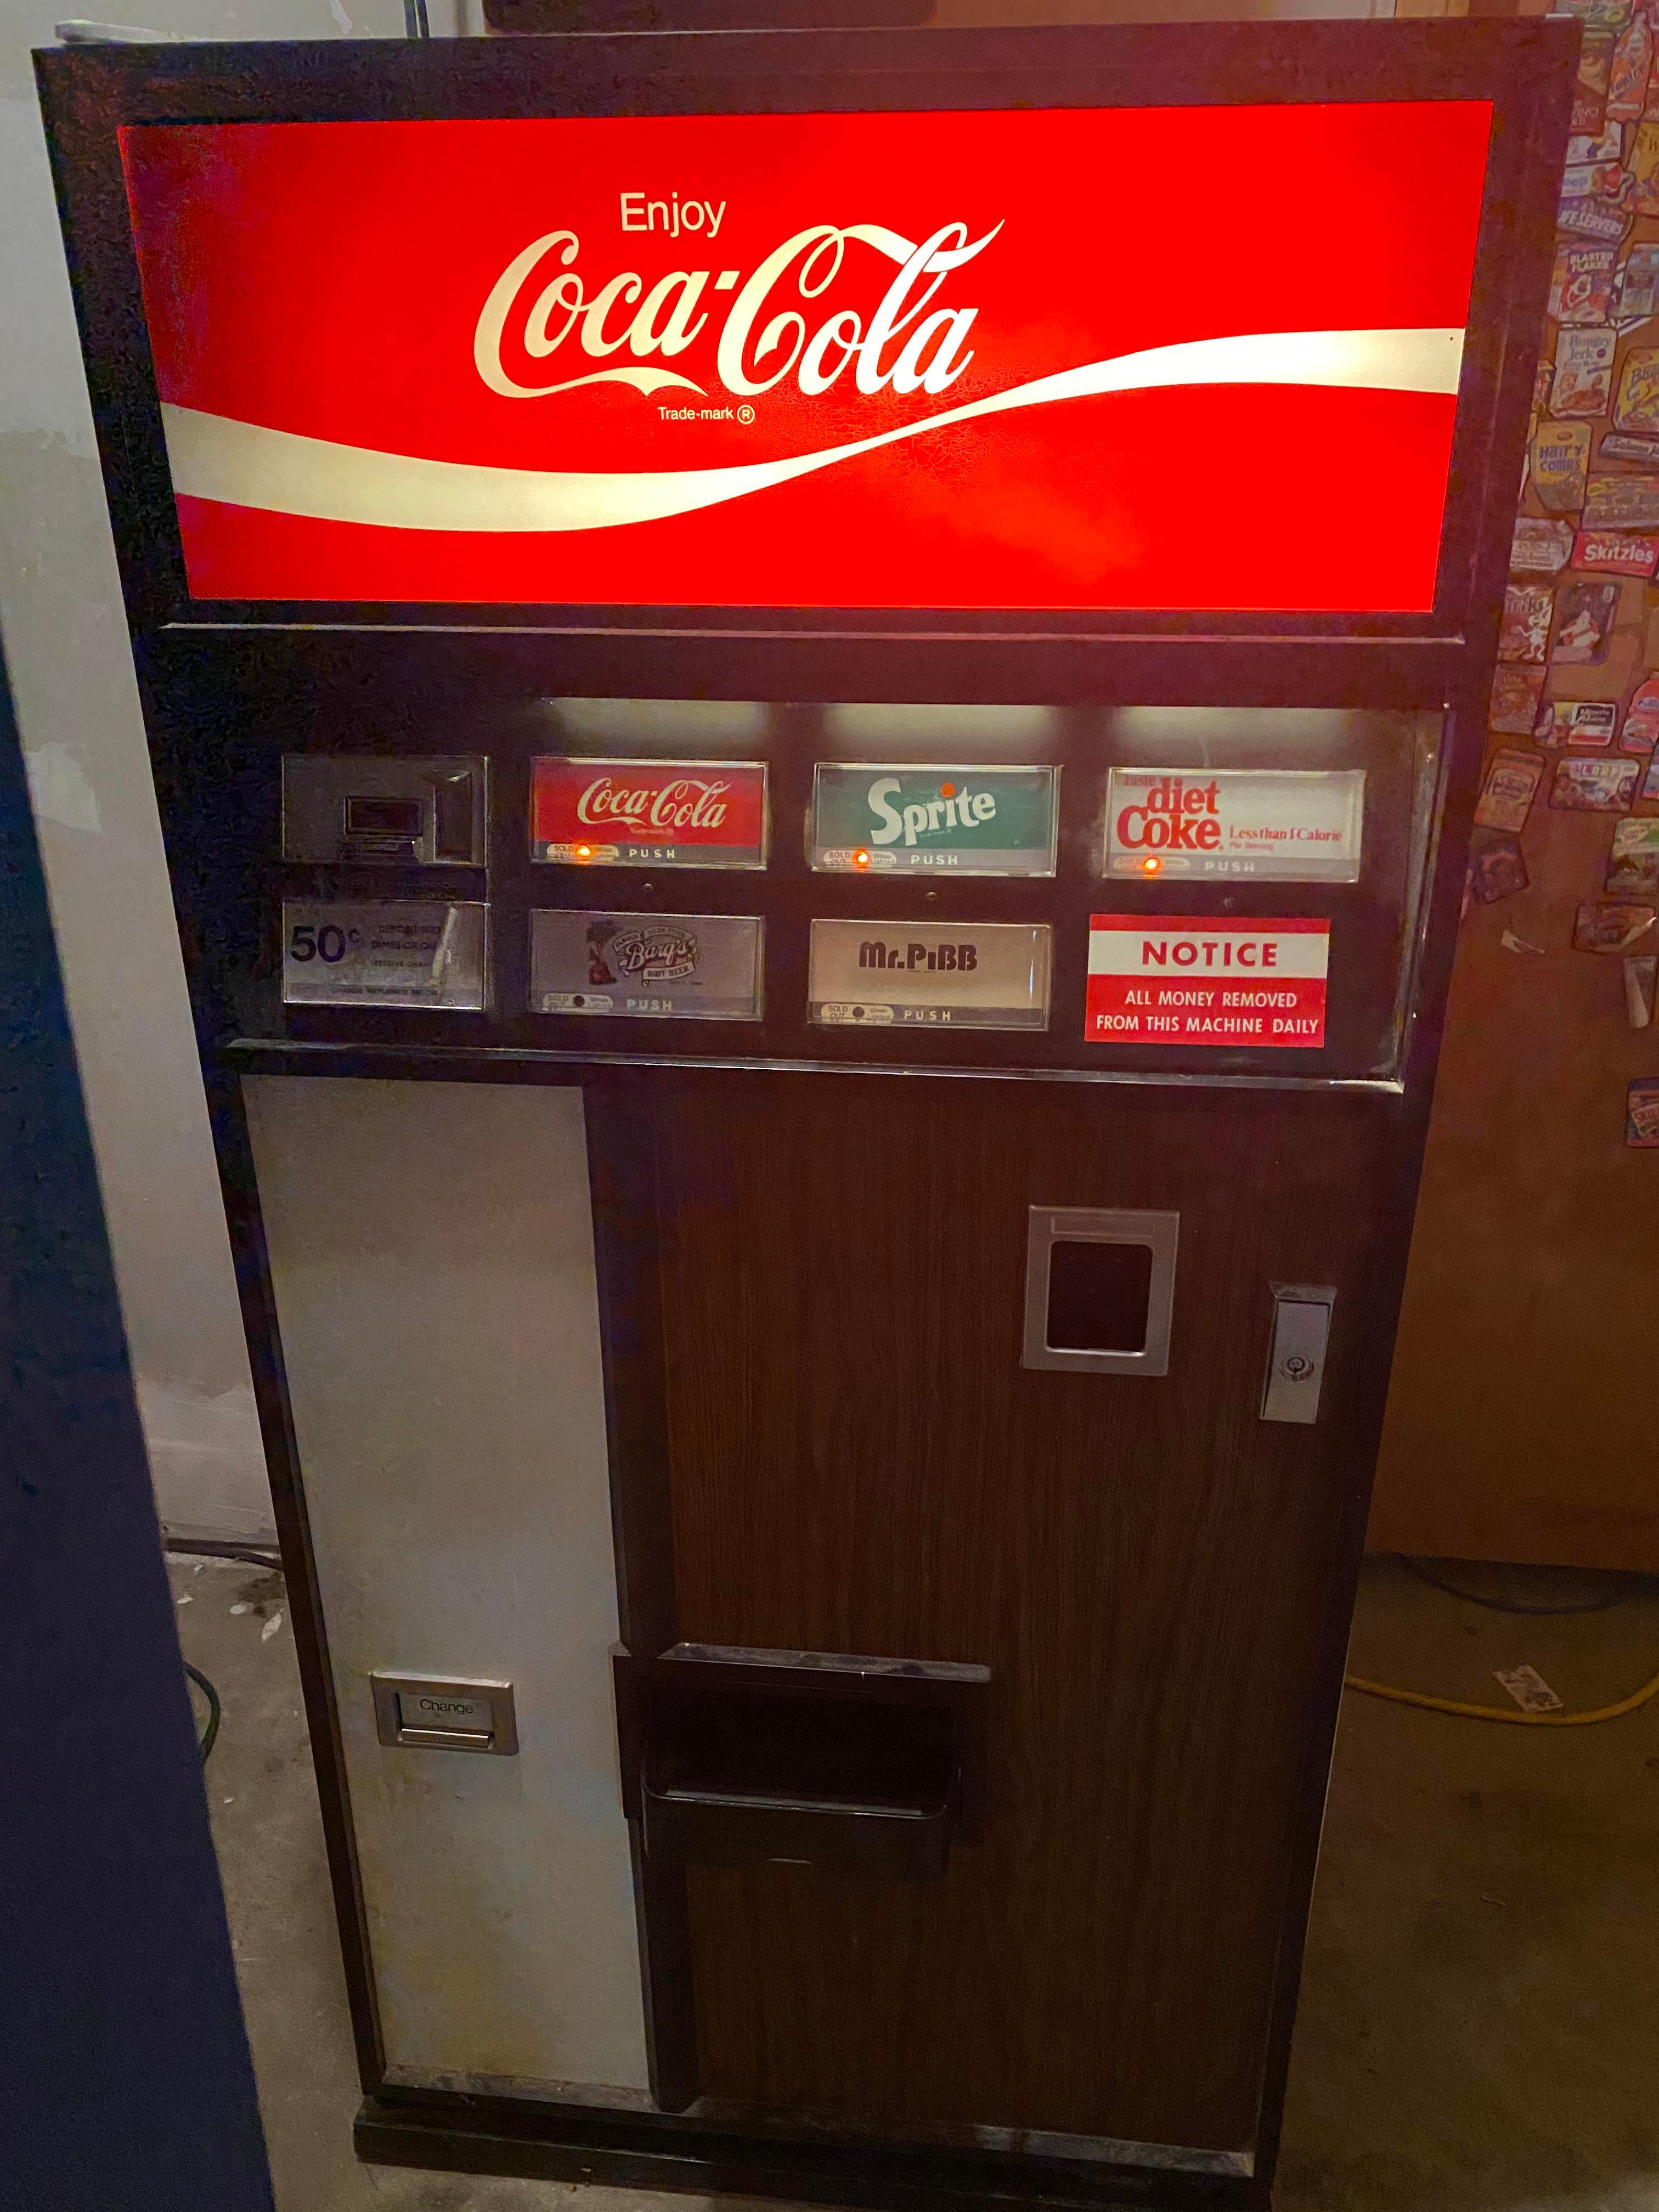 1982 dixie narco coke machine with original labels. - 90kids